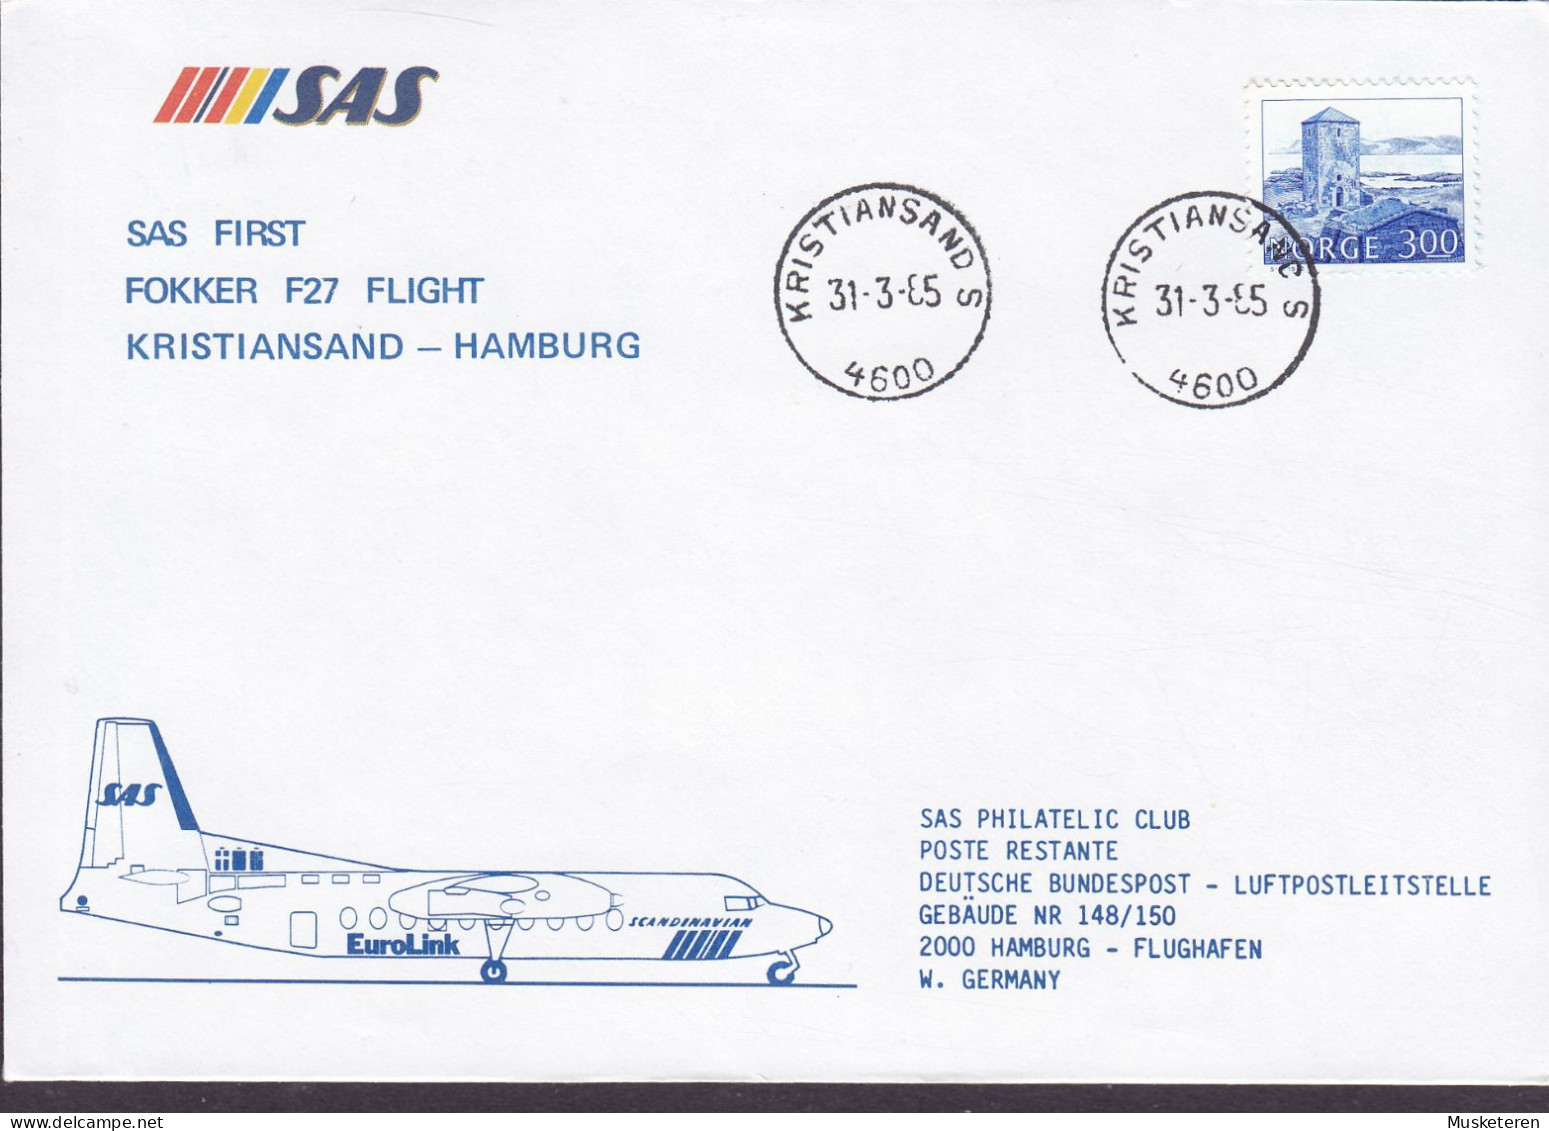 Norway SAS First Fokker F27 Flight KRISTIANSAND-HAMBURG 1985 Cover Brief Lettre Kloster Selje, Selja Stamp - Briefe U. Dokumente